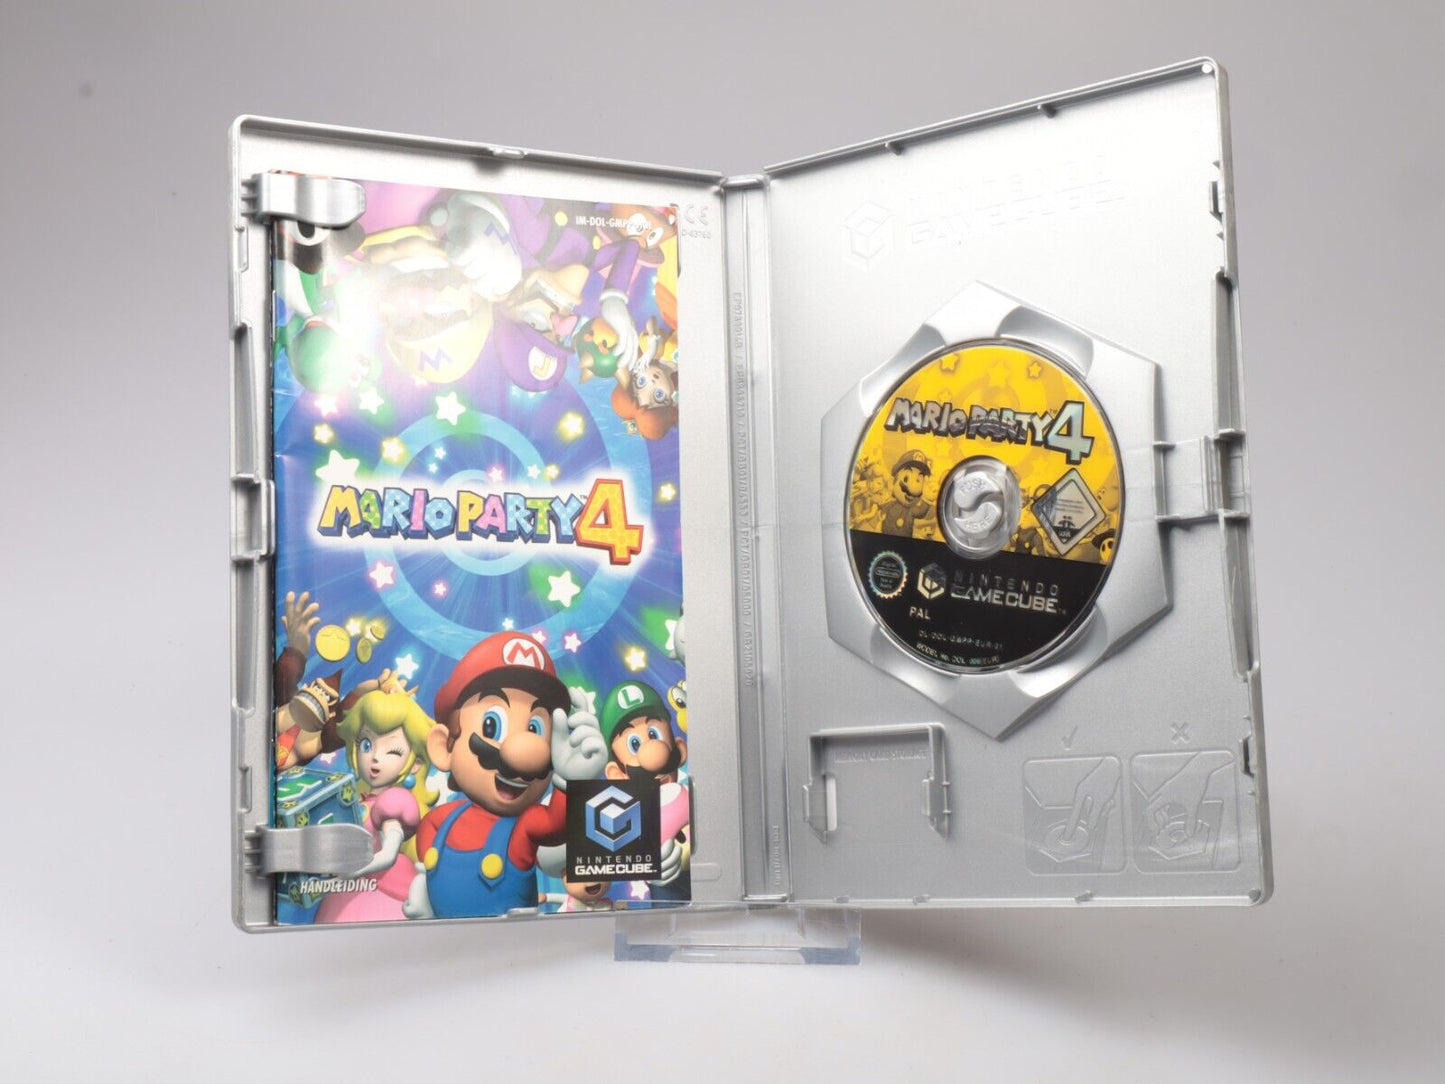 GameCube | Mario-feest 4 | PC PAL HOL 